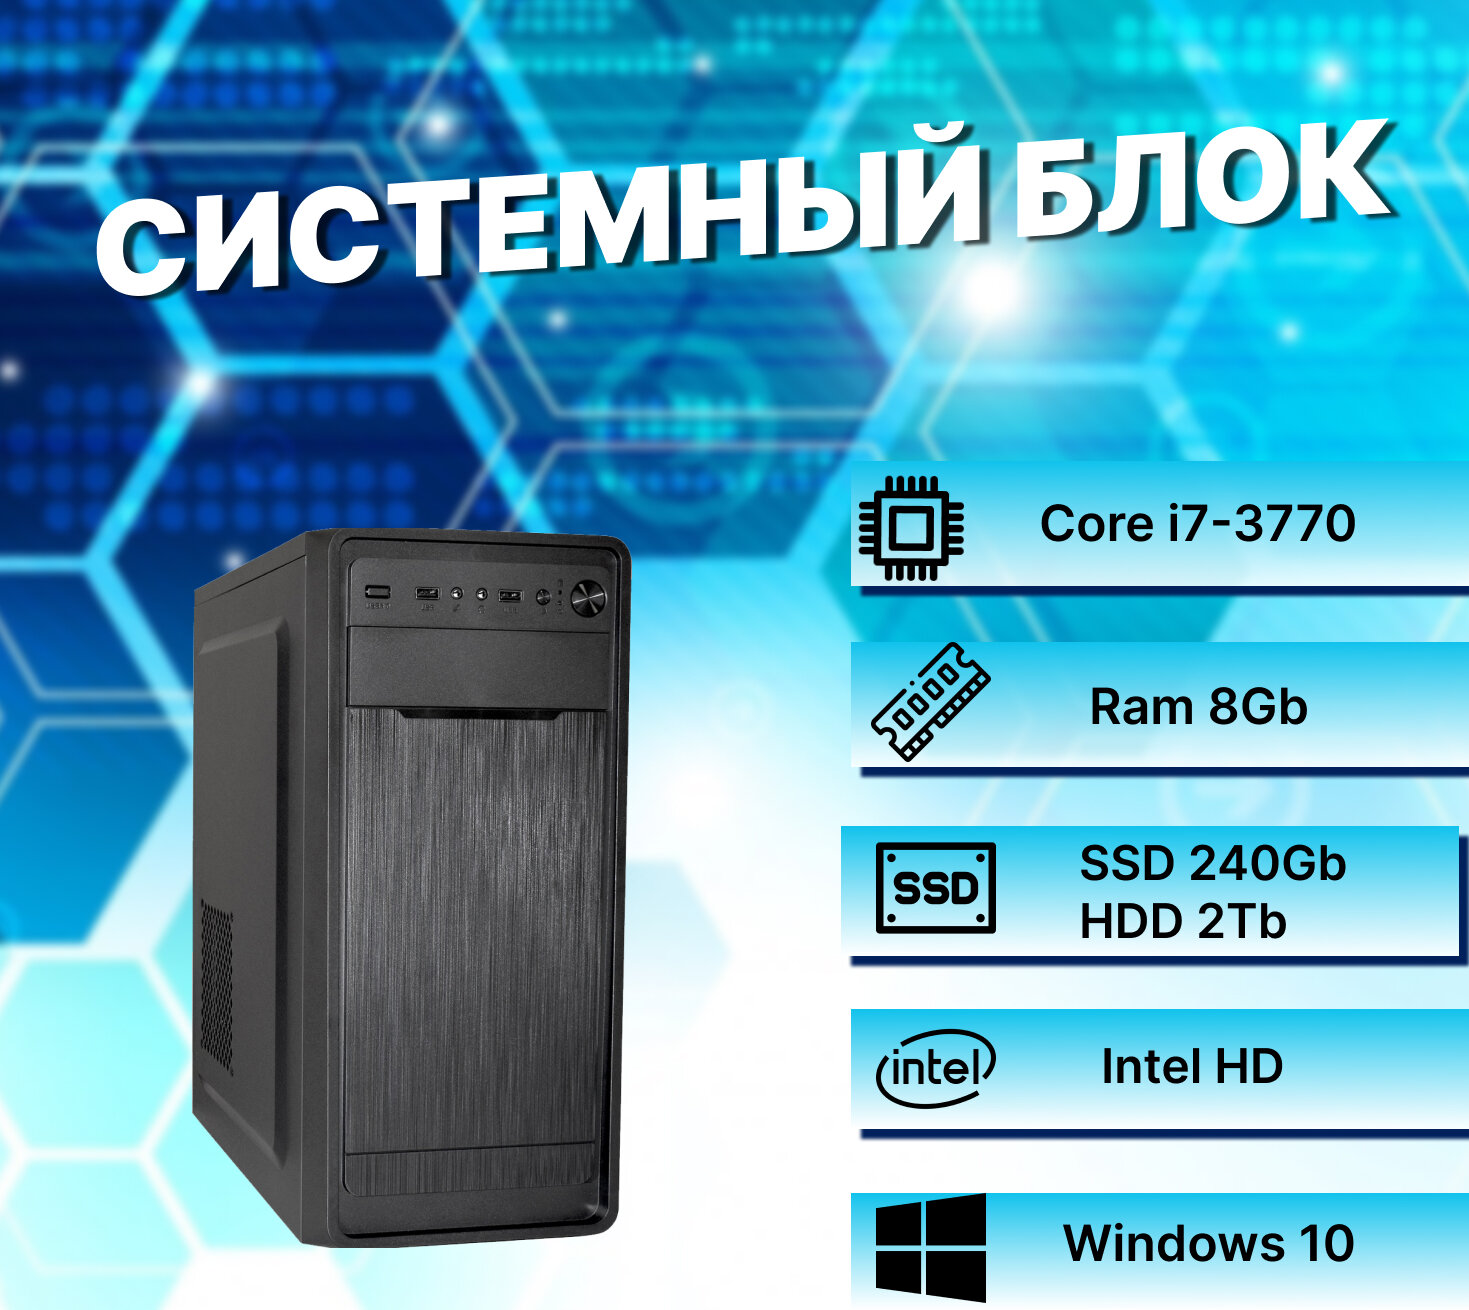 Системный блок Intel Core I7-3770 (3.4ГГц)/ RAM 8Gb/ SSD 240Gb/ HDD 2Tb/ Intel HD/ Windows 10 Pro